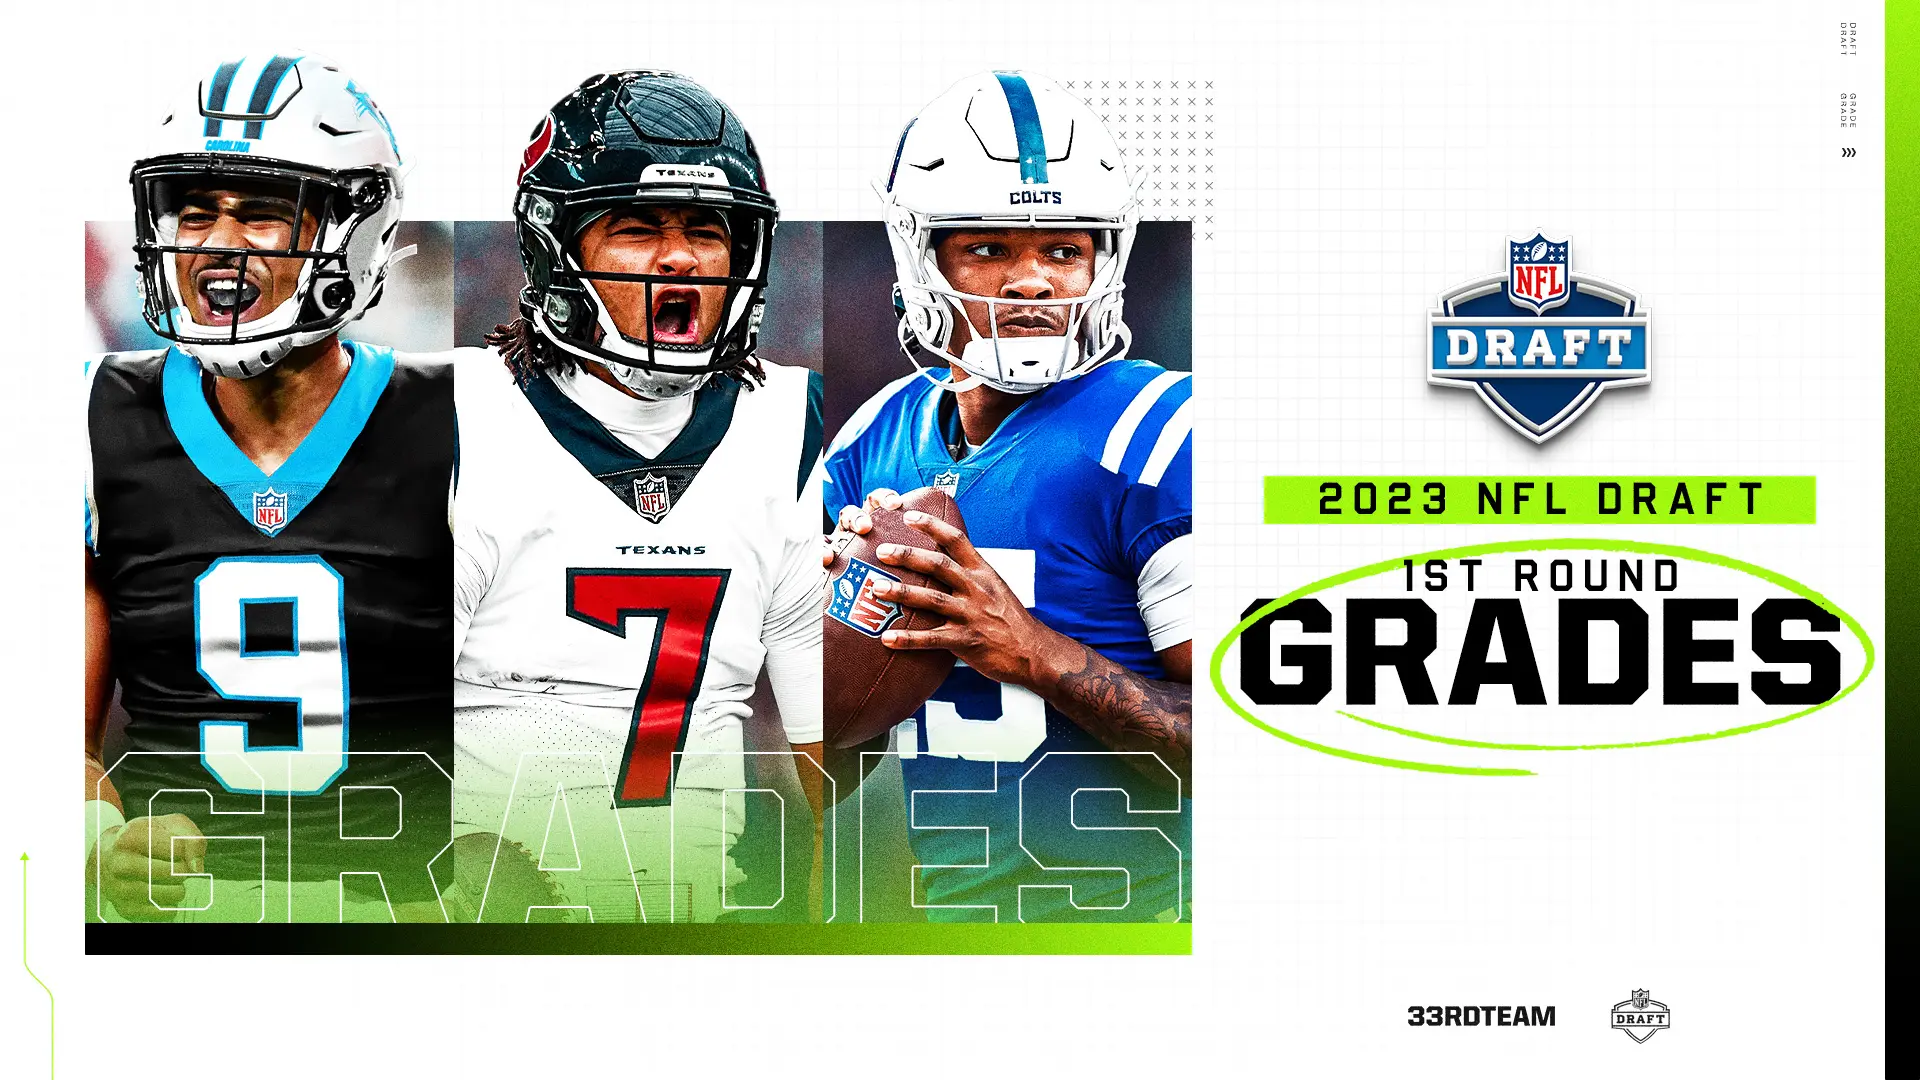 Broncos' 2021 NFL Draft picks finalized